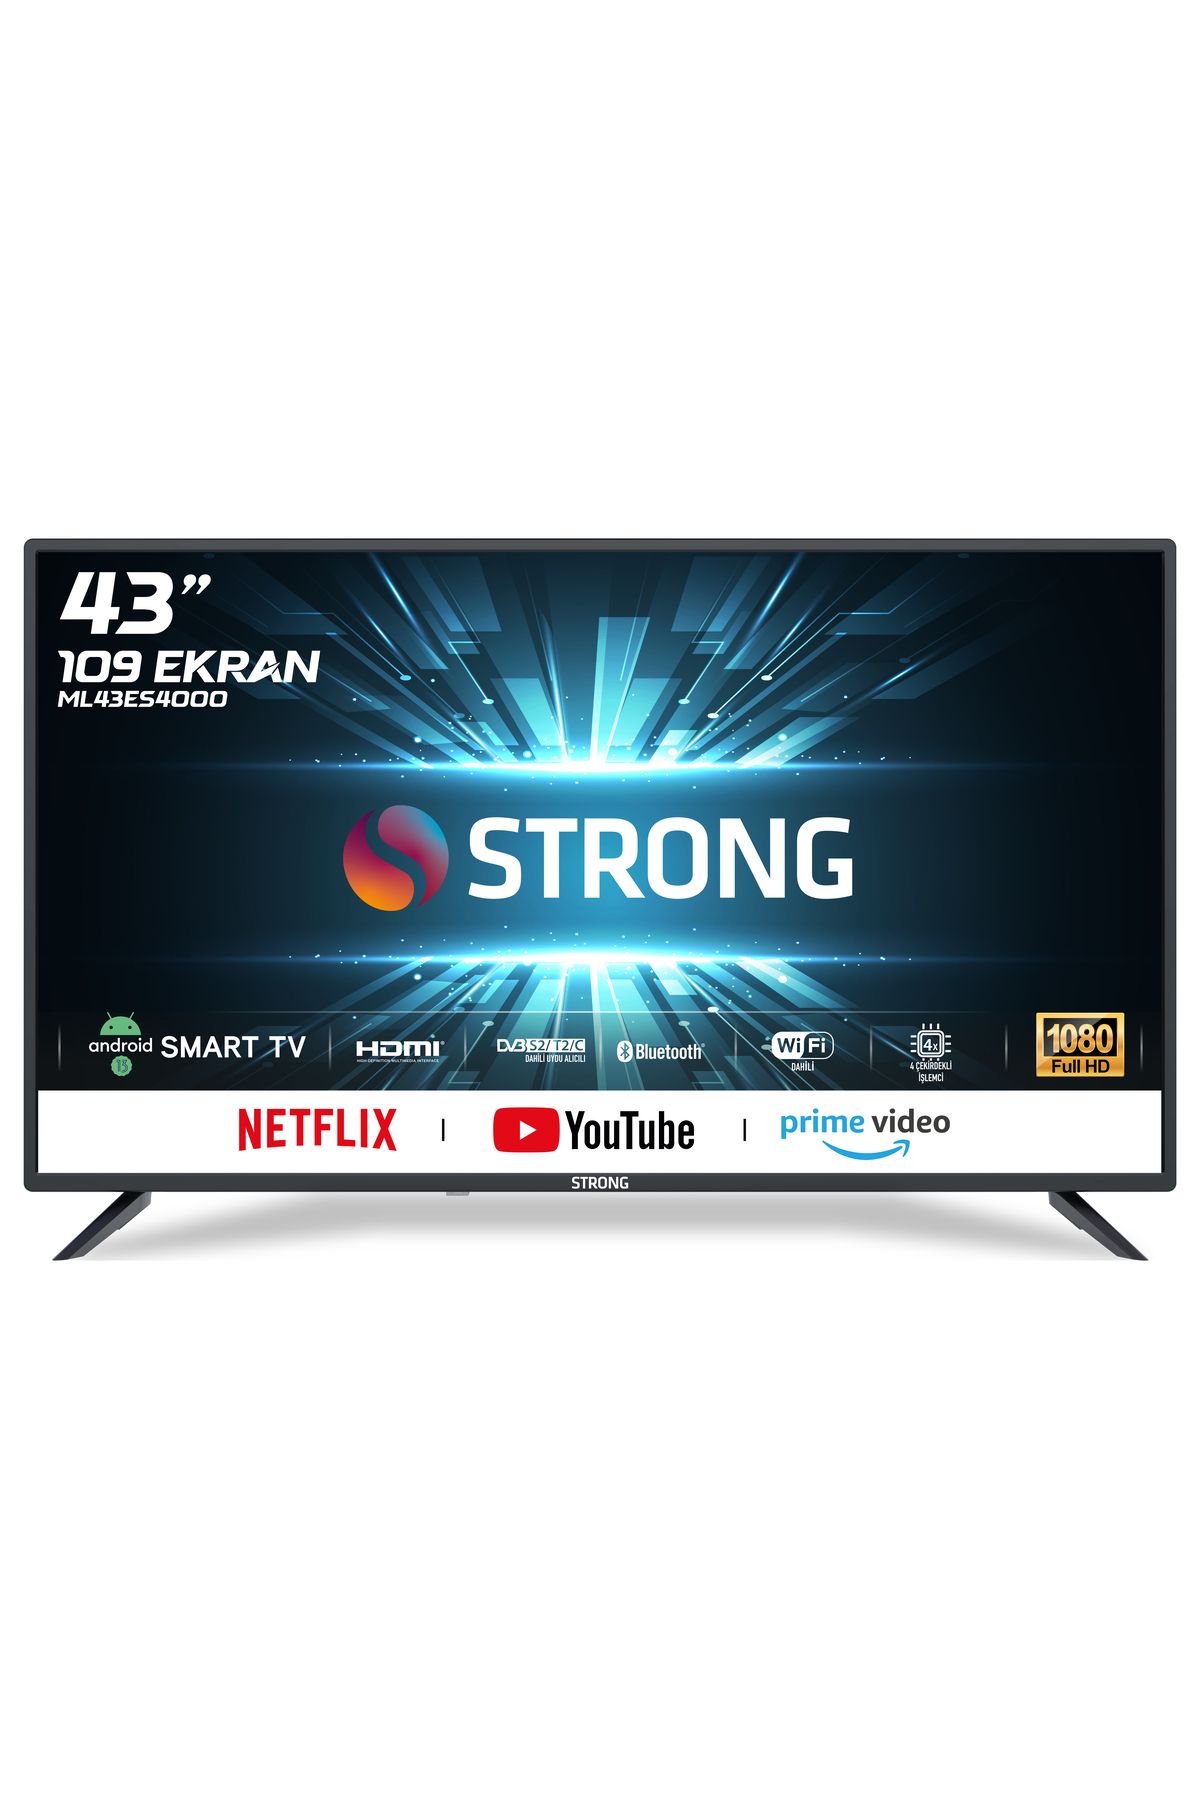 Strong Mt43es4000 43'' 109 Ekran Uydu Alıcılı Smart Led Tv